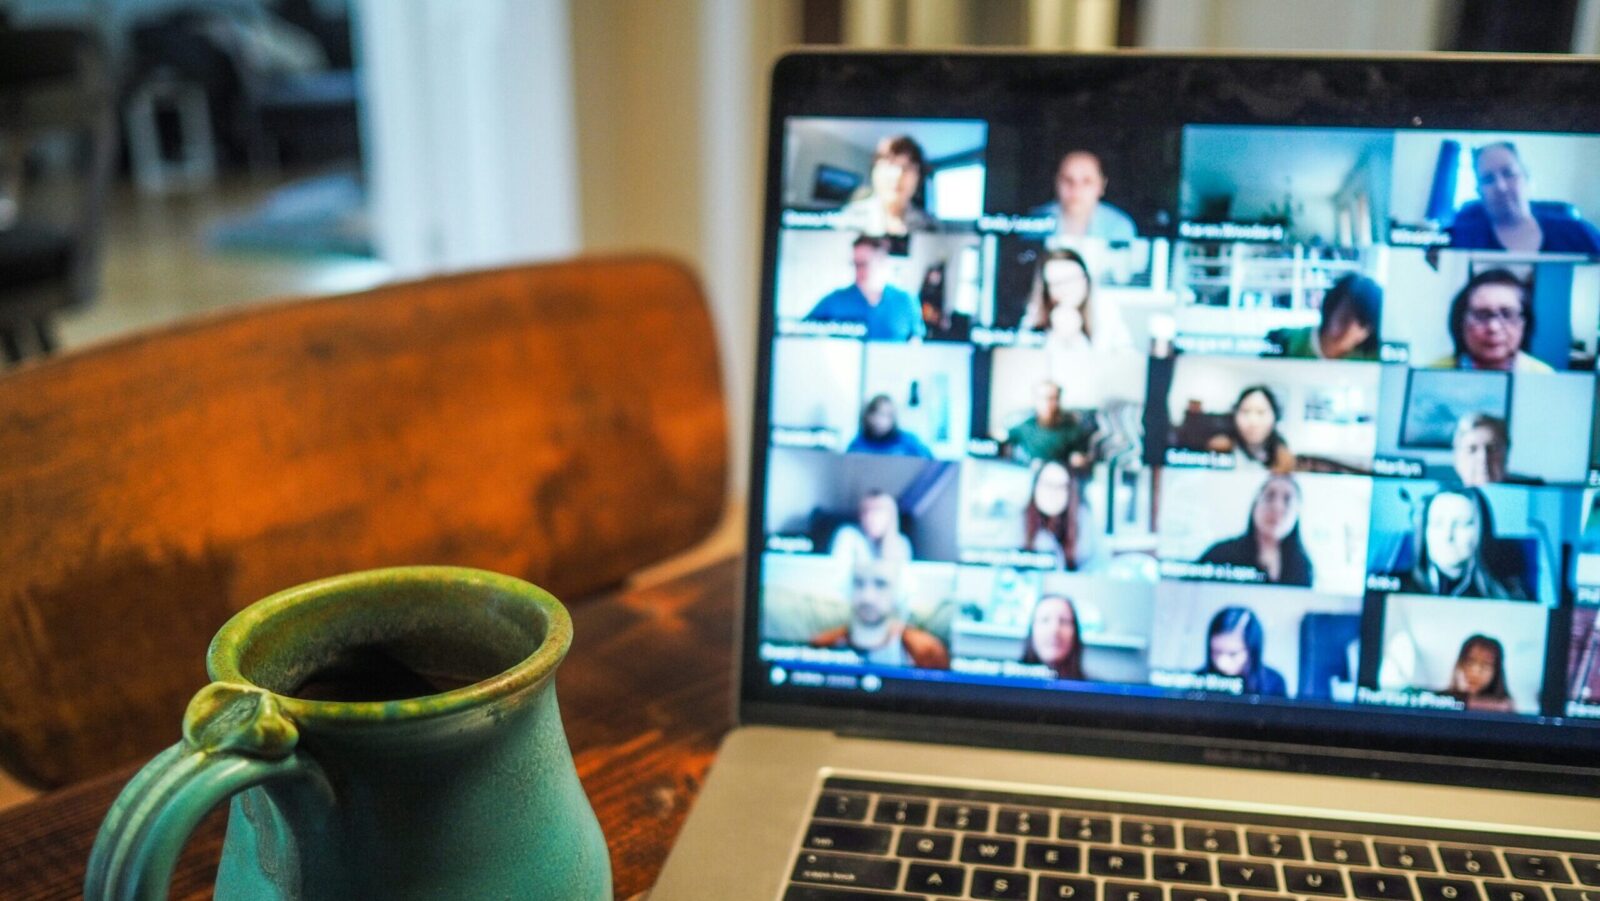 a laptop screen displaying a team video call next to a mug